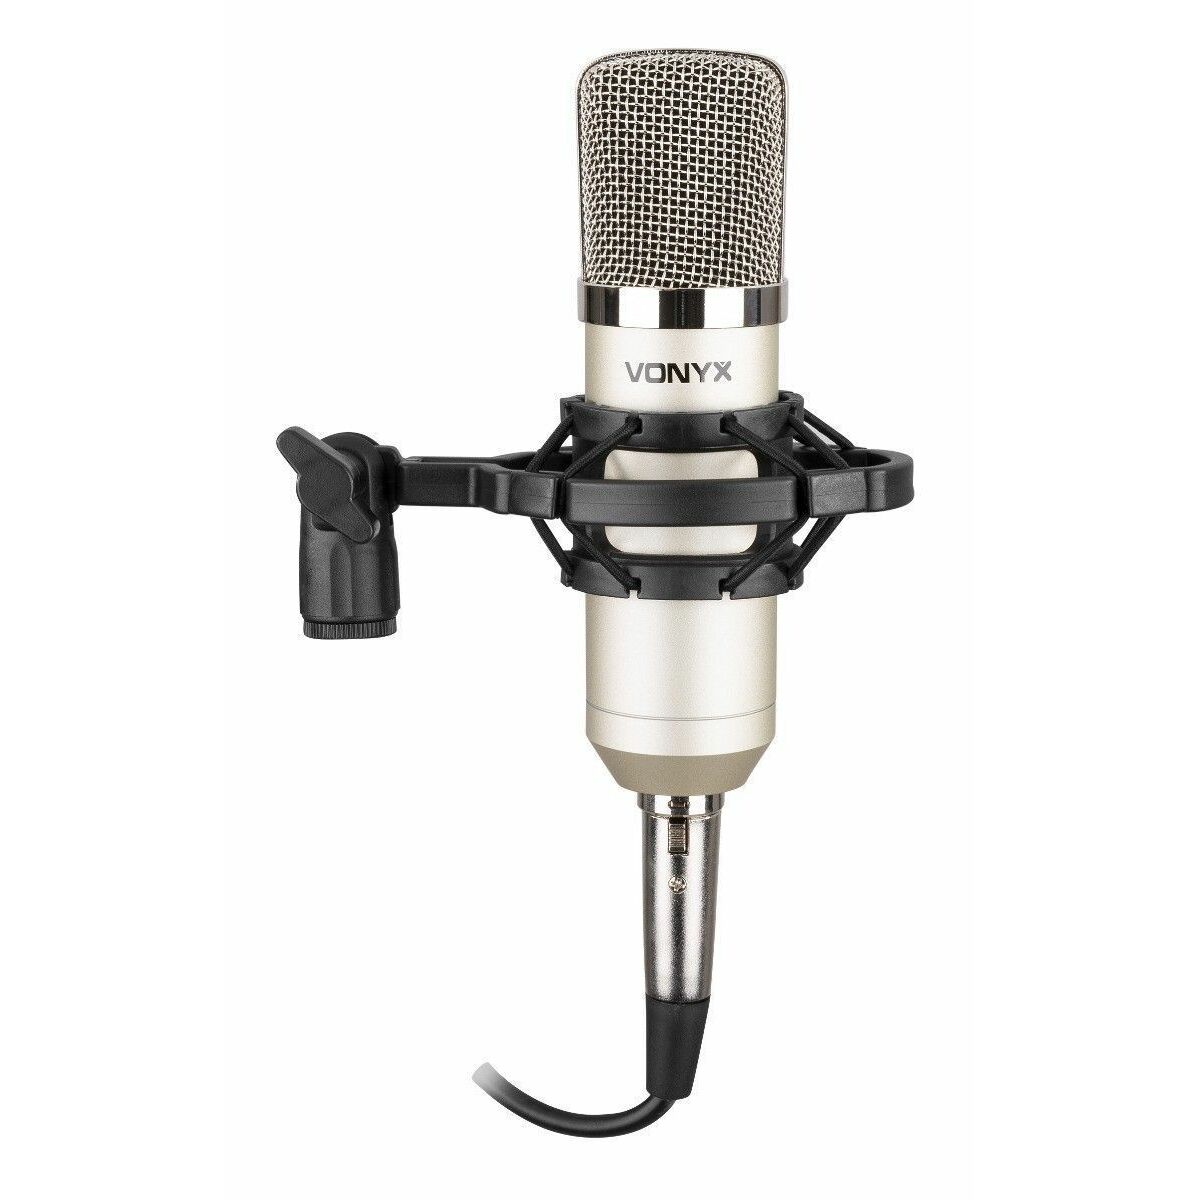 Retourdeal - Vonyx CM400 Studio condensator microfoon incl. shockmount